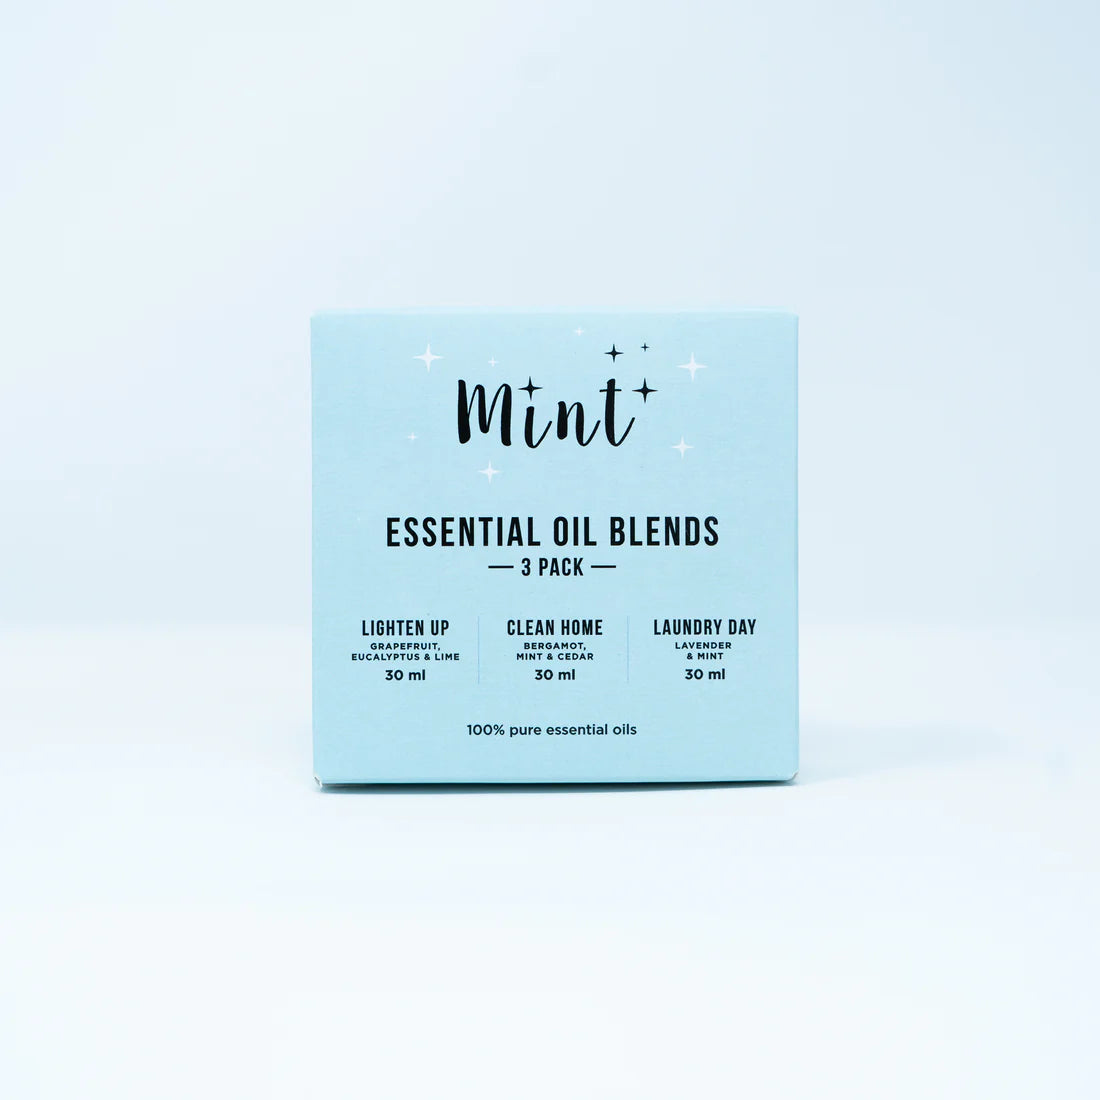 Essential Oil Blends - 3 pack